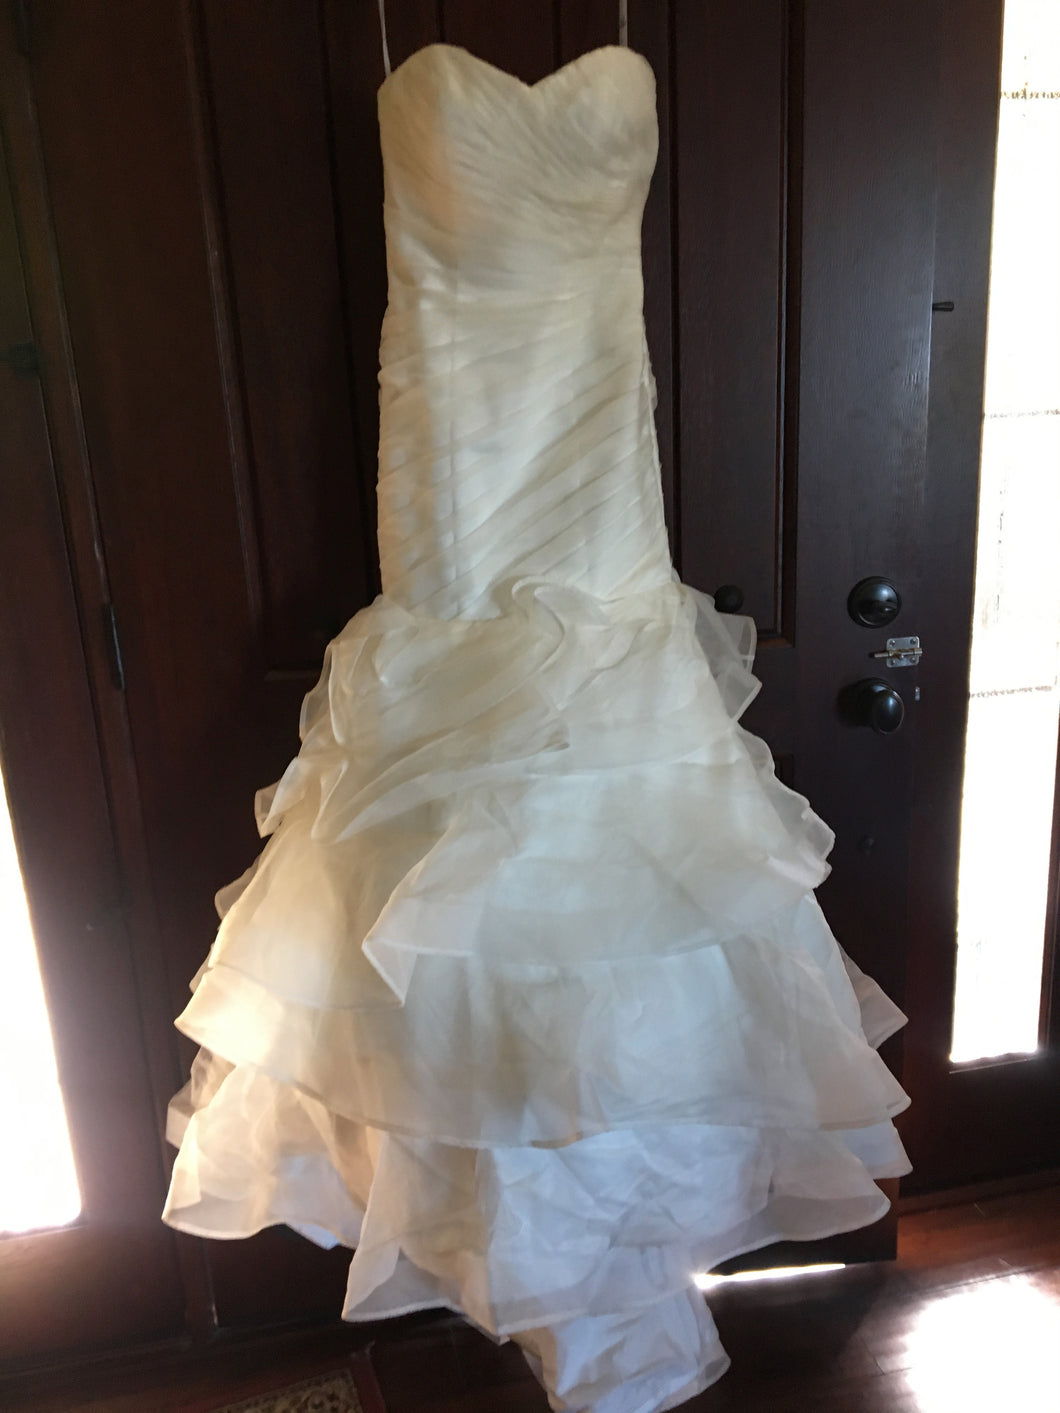 Simone Carvalli 'White Silk' size 2 used wedding dress front view on hanger